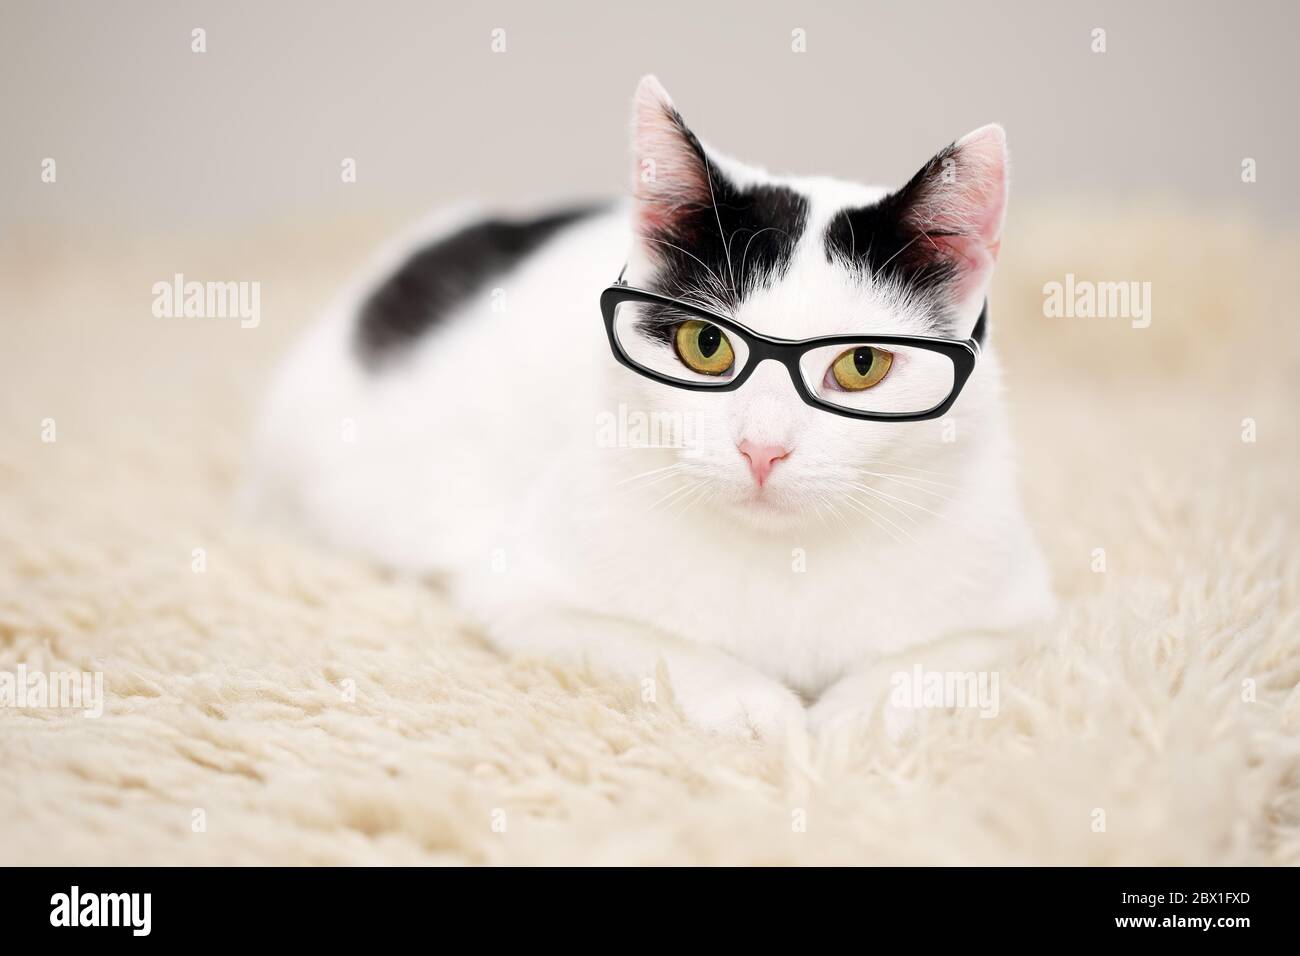 Portrait of a beautiful white cat with black spots, wearing trendy prescription glasses Stock Photo